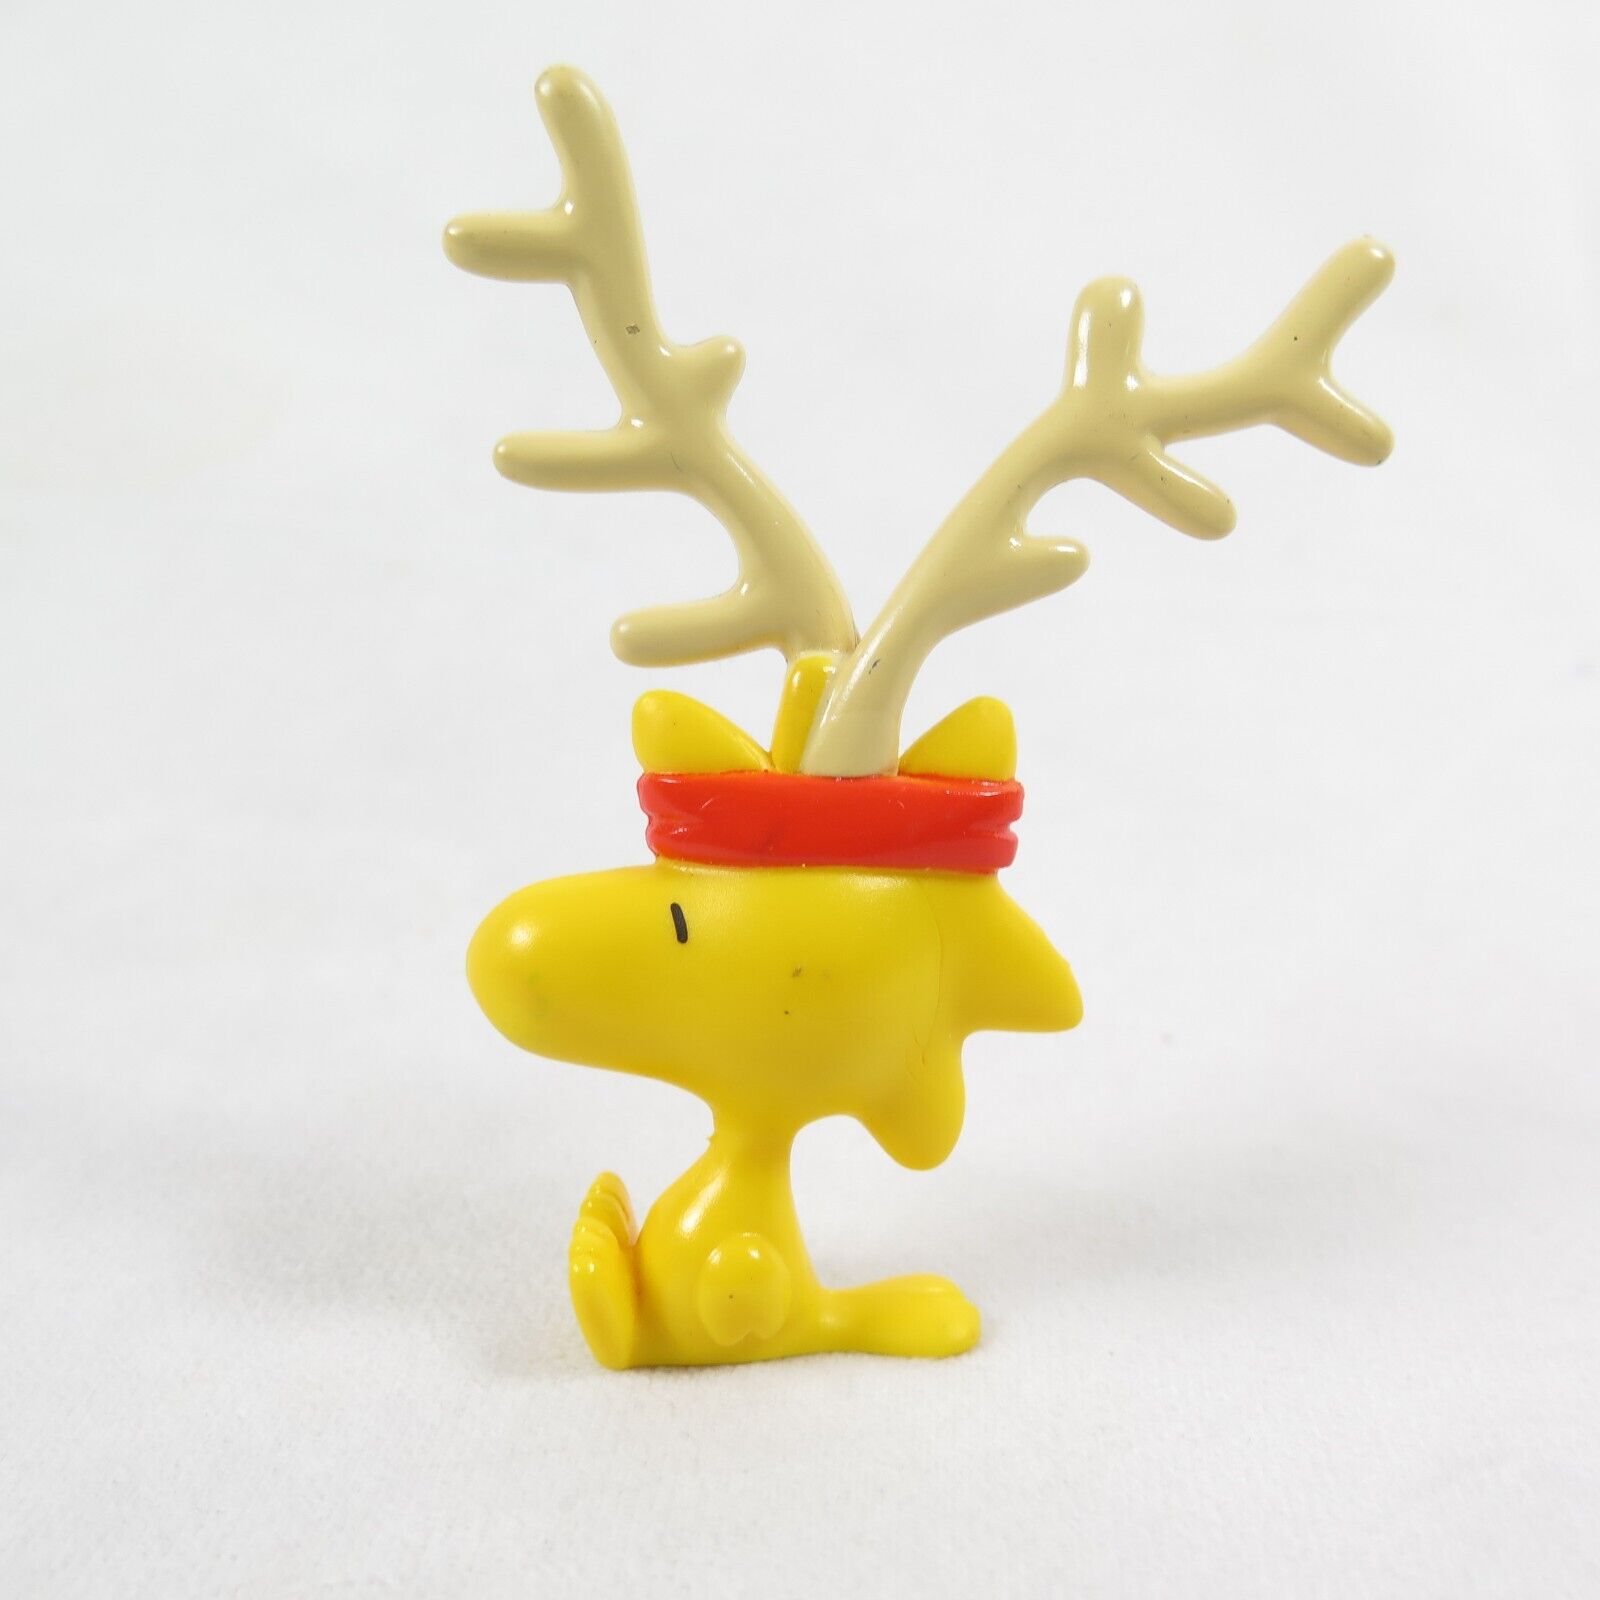 Woodstock Peanuts Figure 2004 w/ Reindeer Antlers Ornament Stands 3.75 in Tall